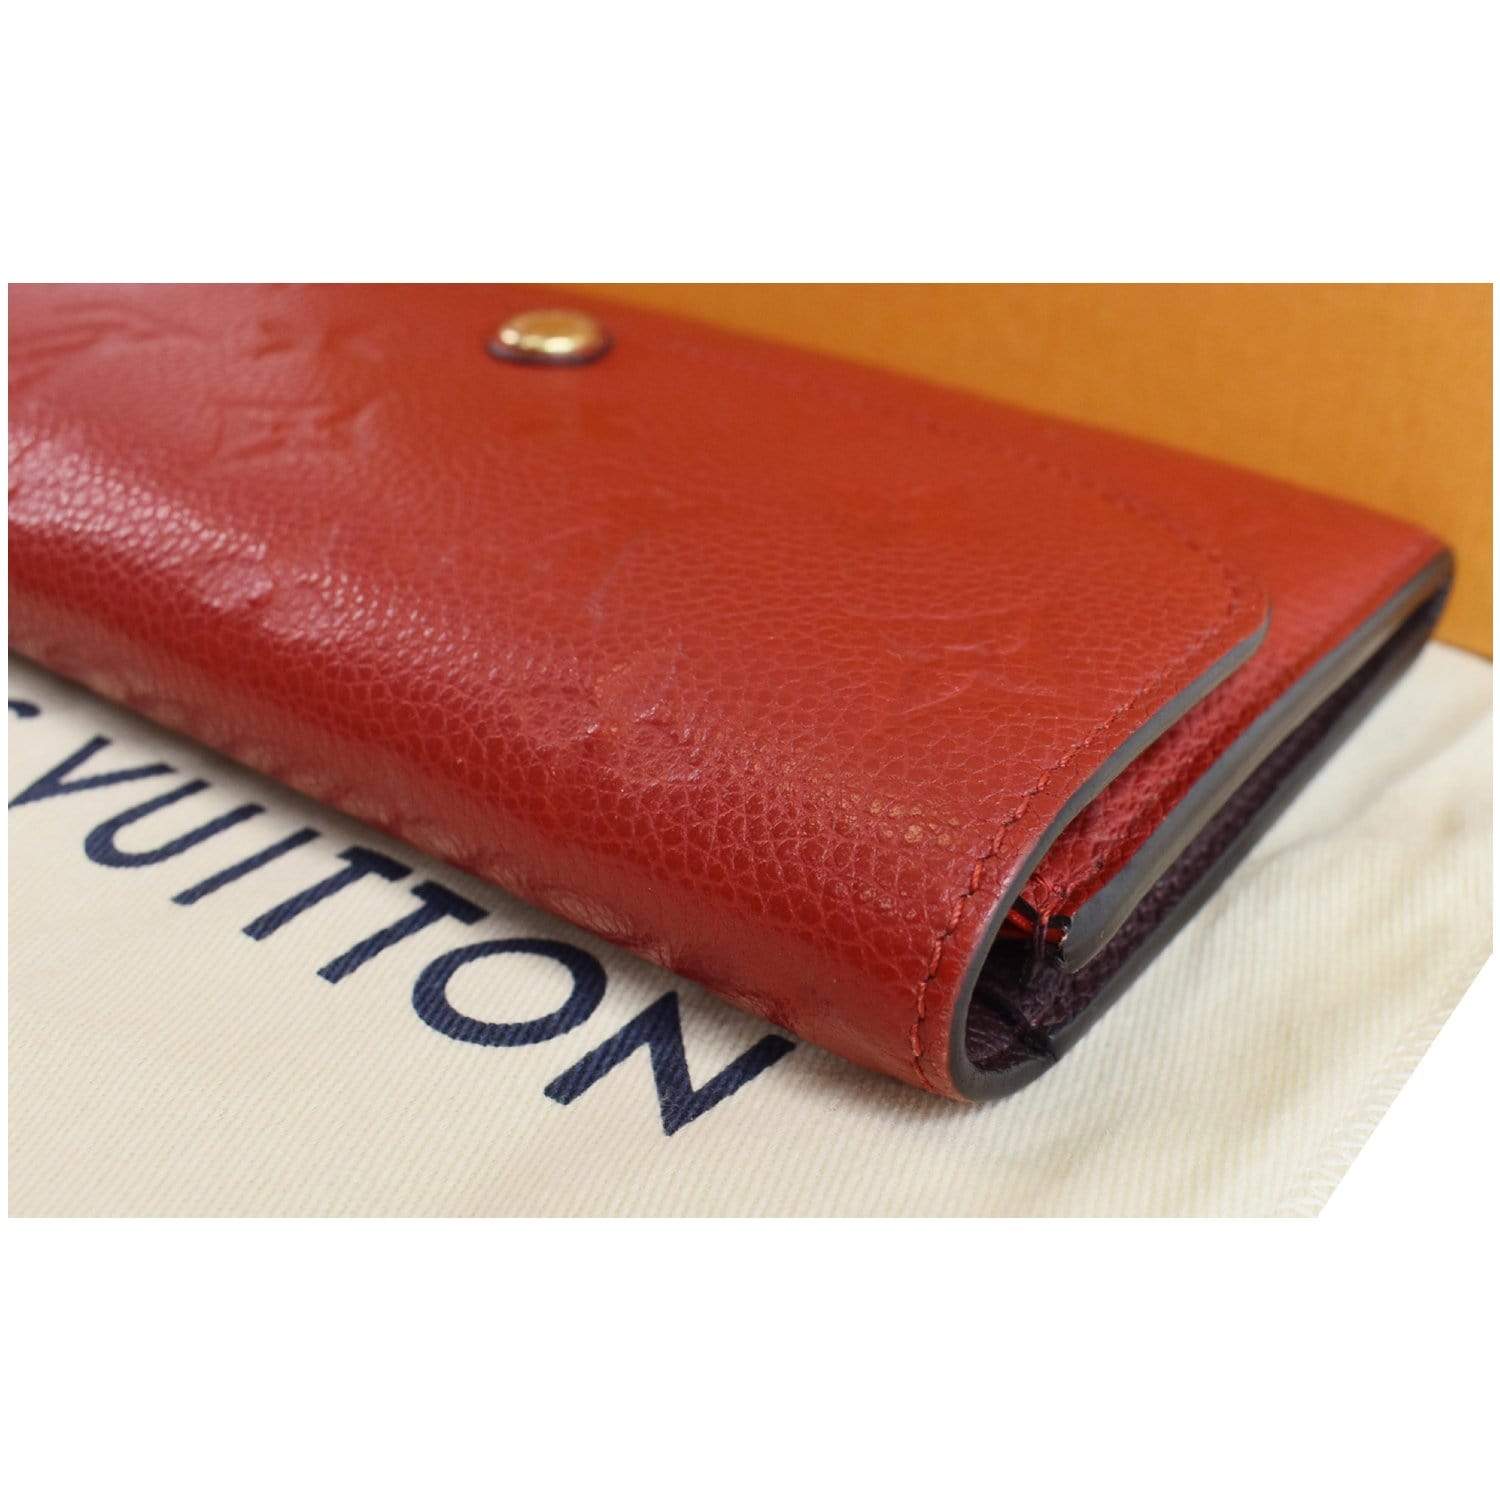 Authentic Louis Vuitton LV Empreinte Leather Monogram Red Wallet